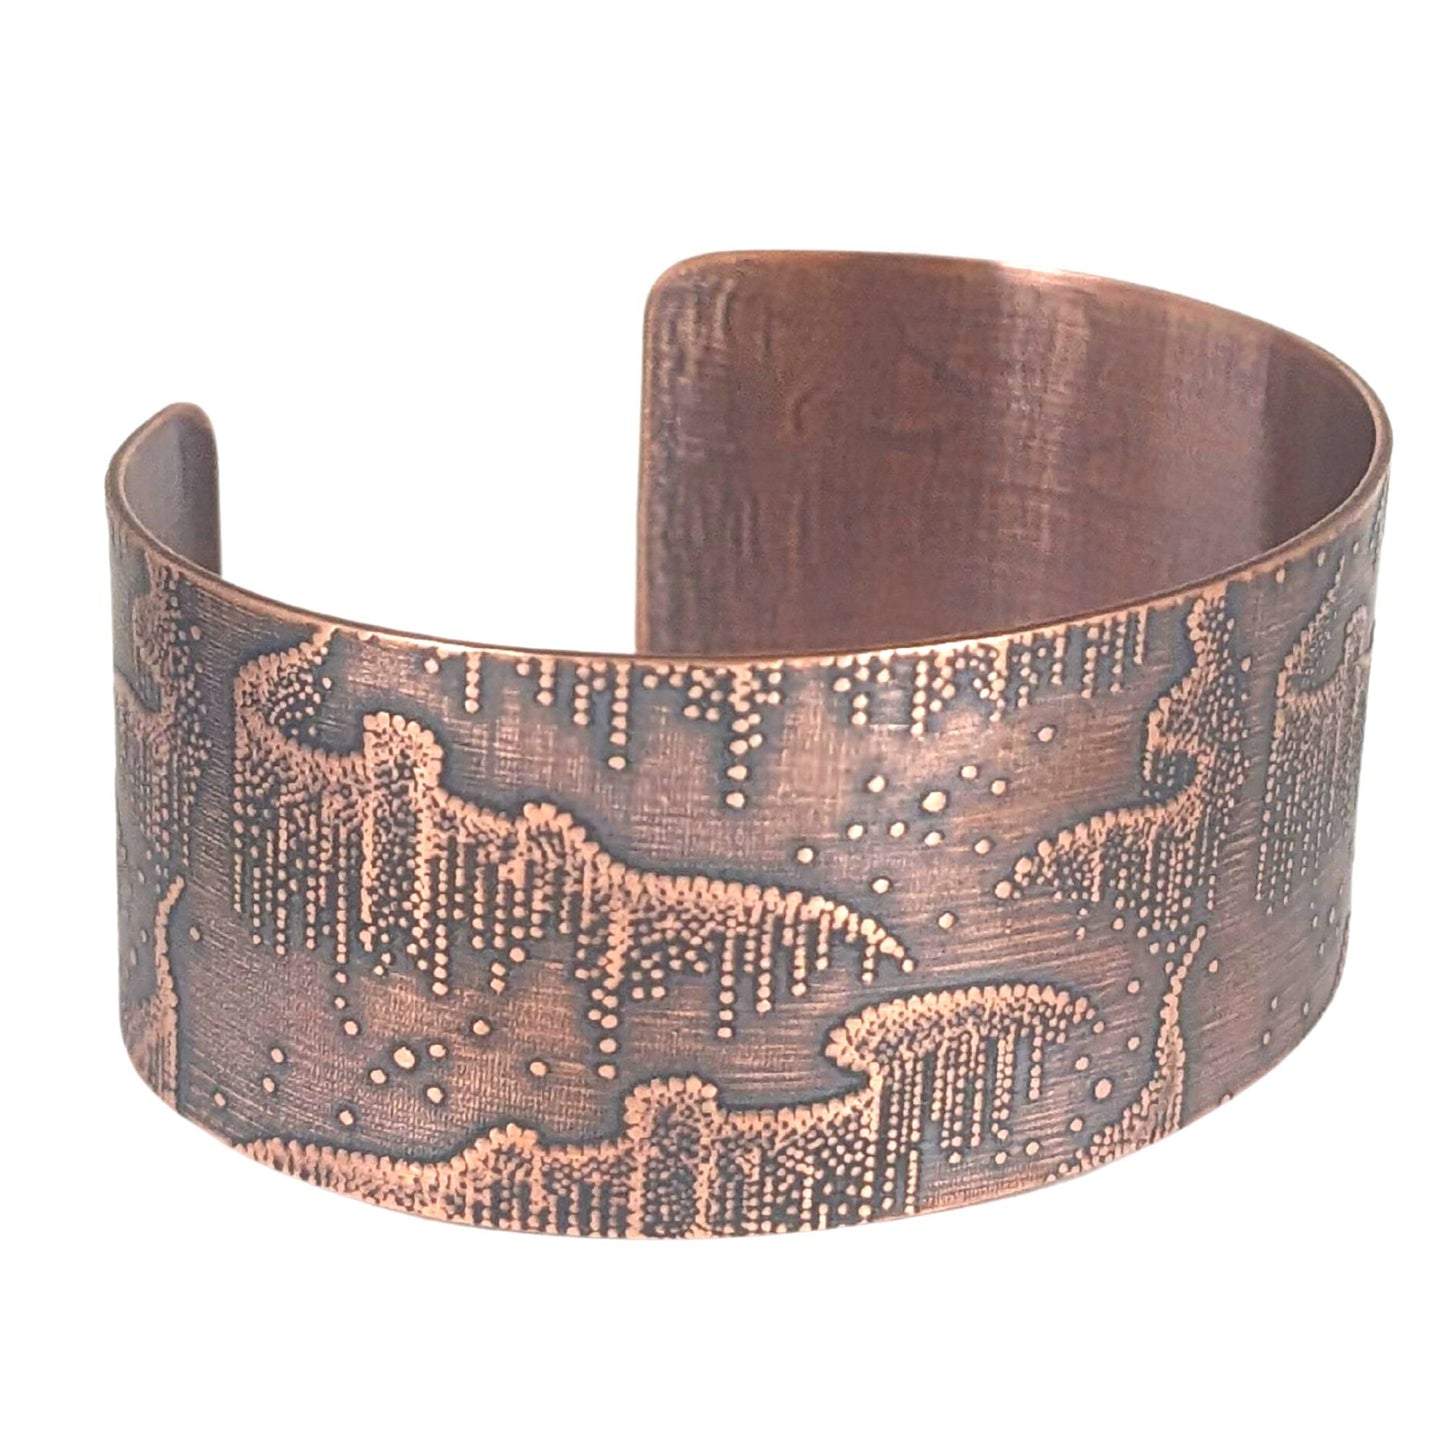 Wide copper cuff bracelet with repeated design pattern representing the aurora borealis